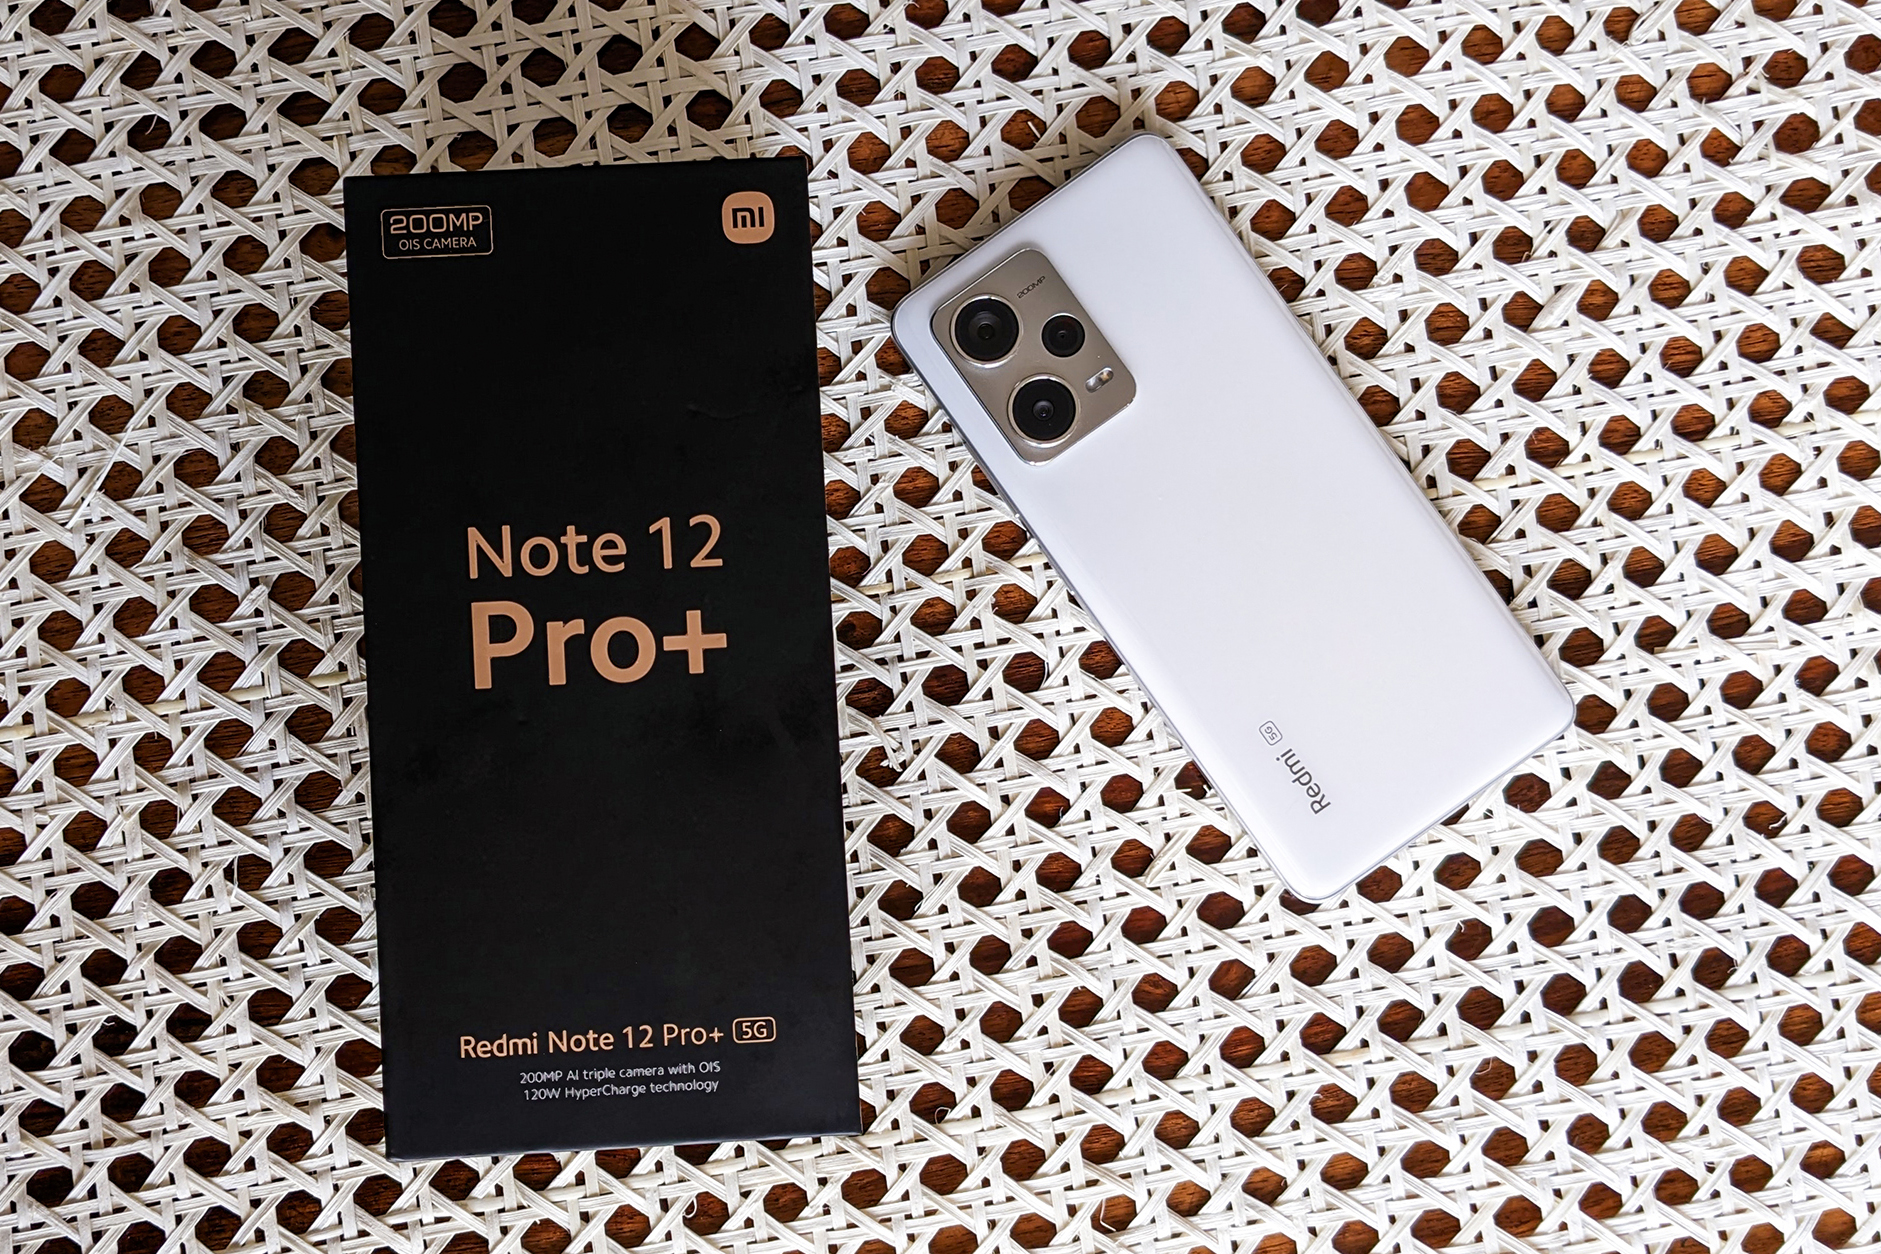 White Xiaomi Redmi Note 12 Pro Plus with its box on a retan table top.